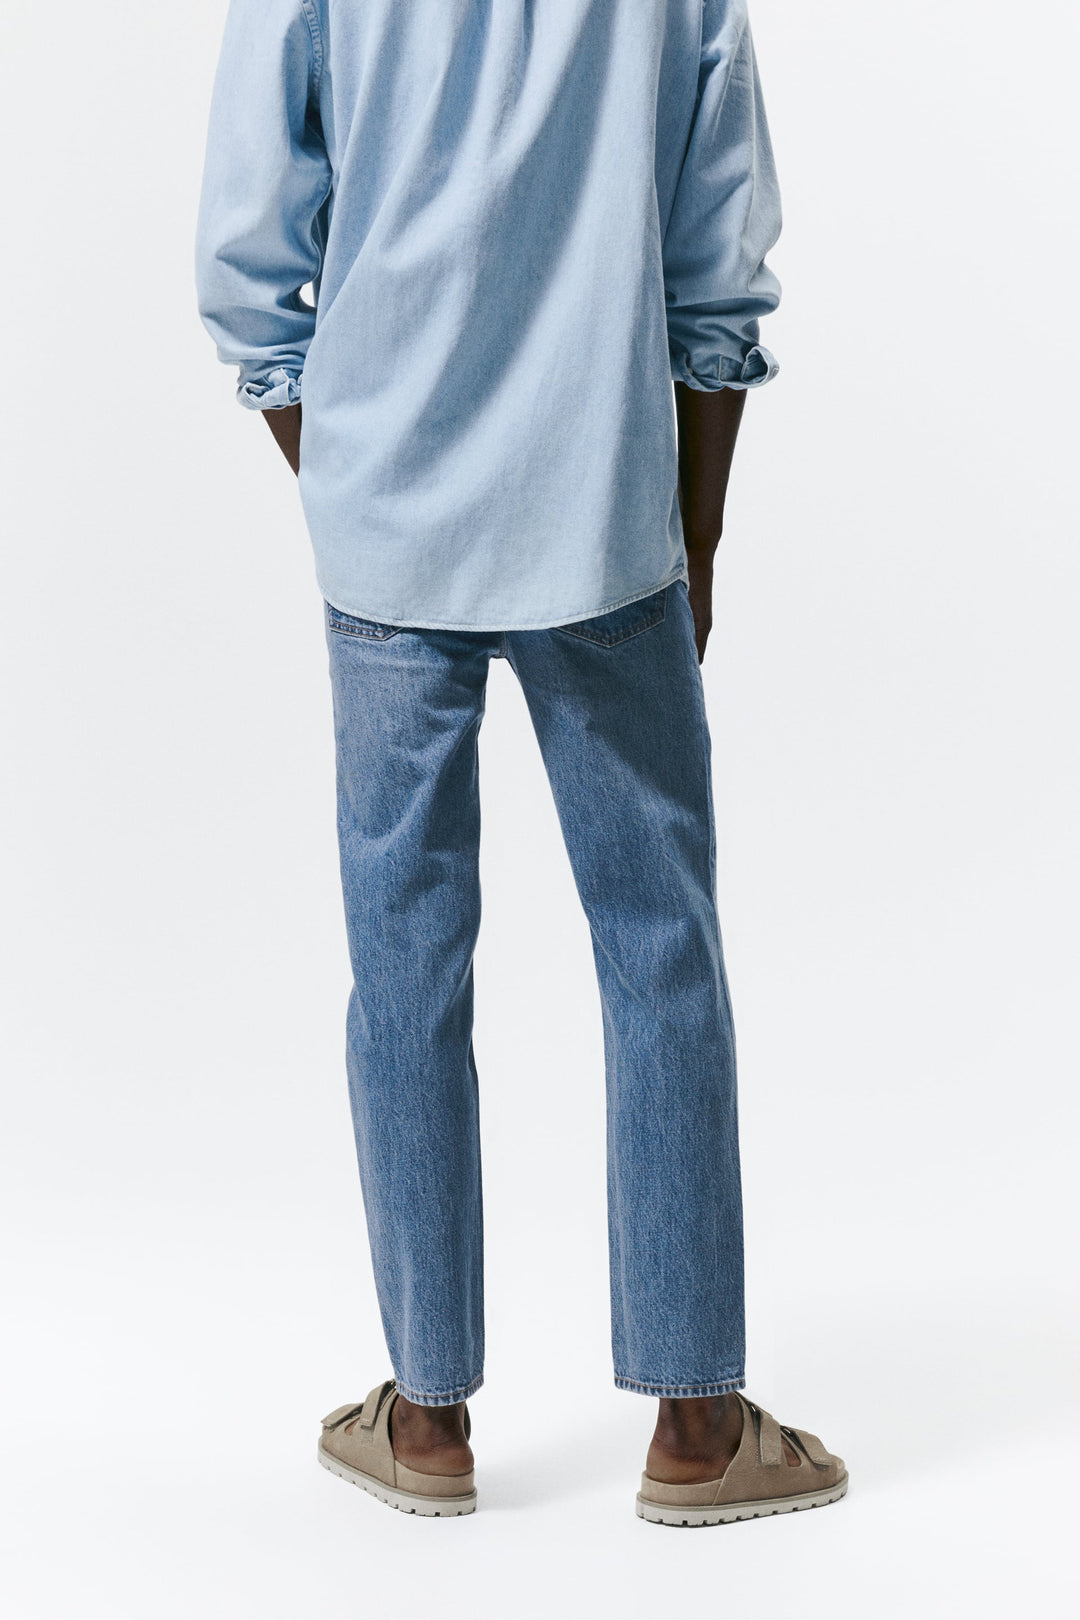 Zara Man Jeans 0647/400/427